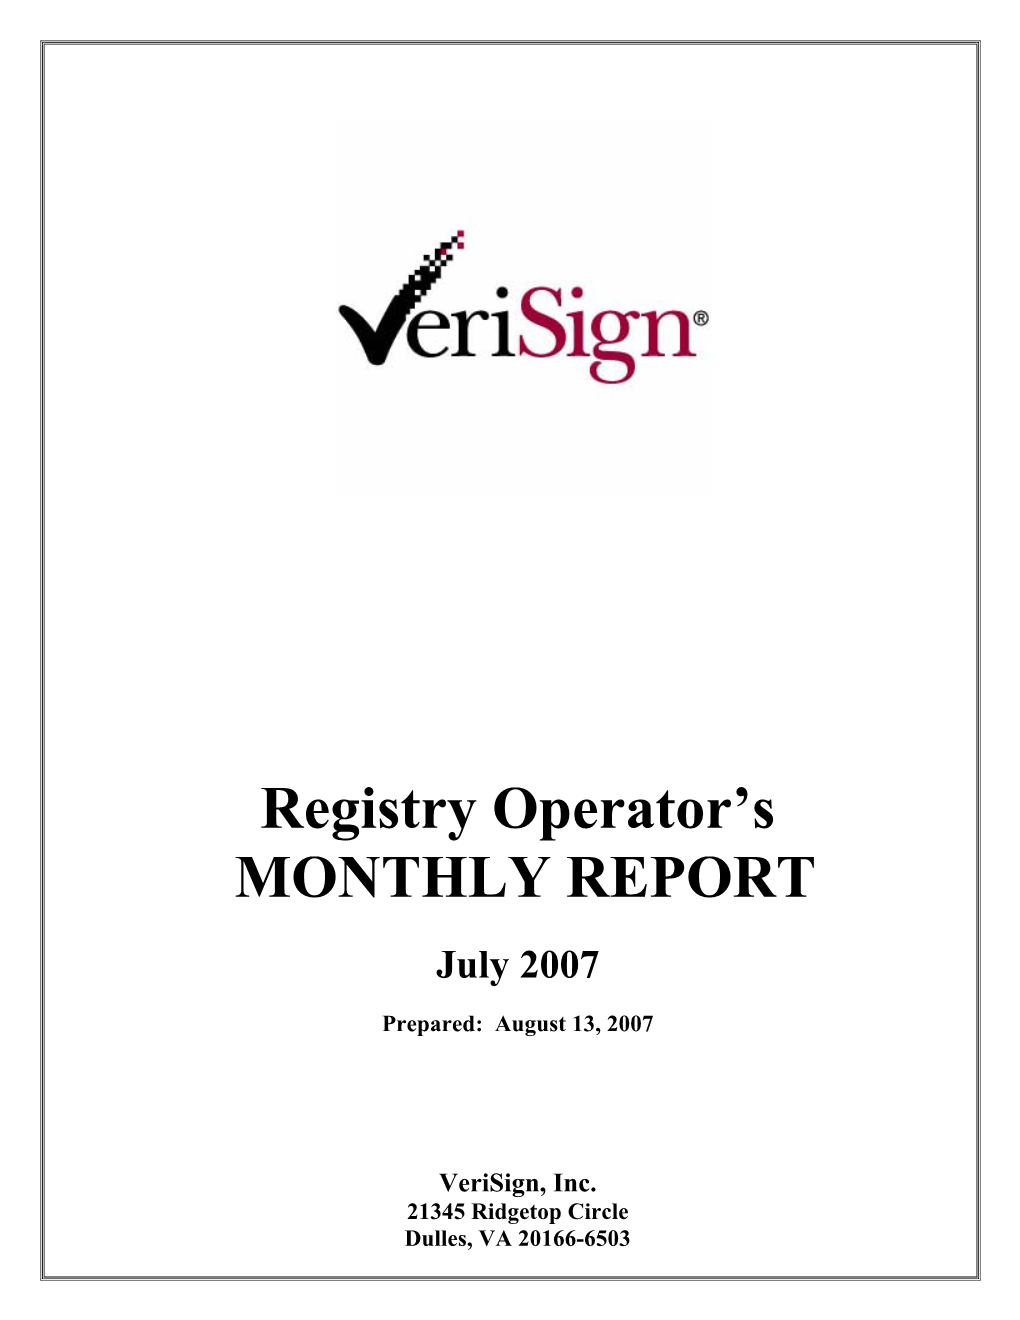 Verisign, Inc. Registry Sensitive Information